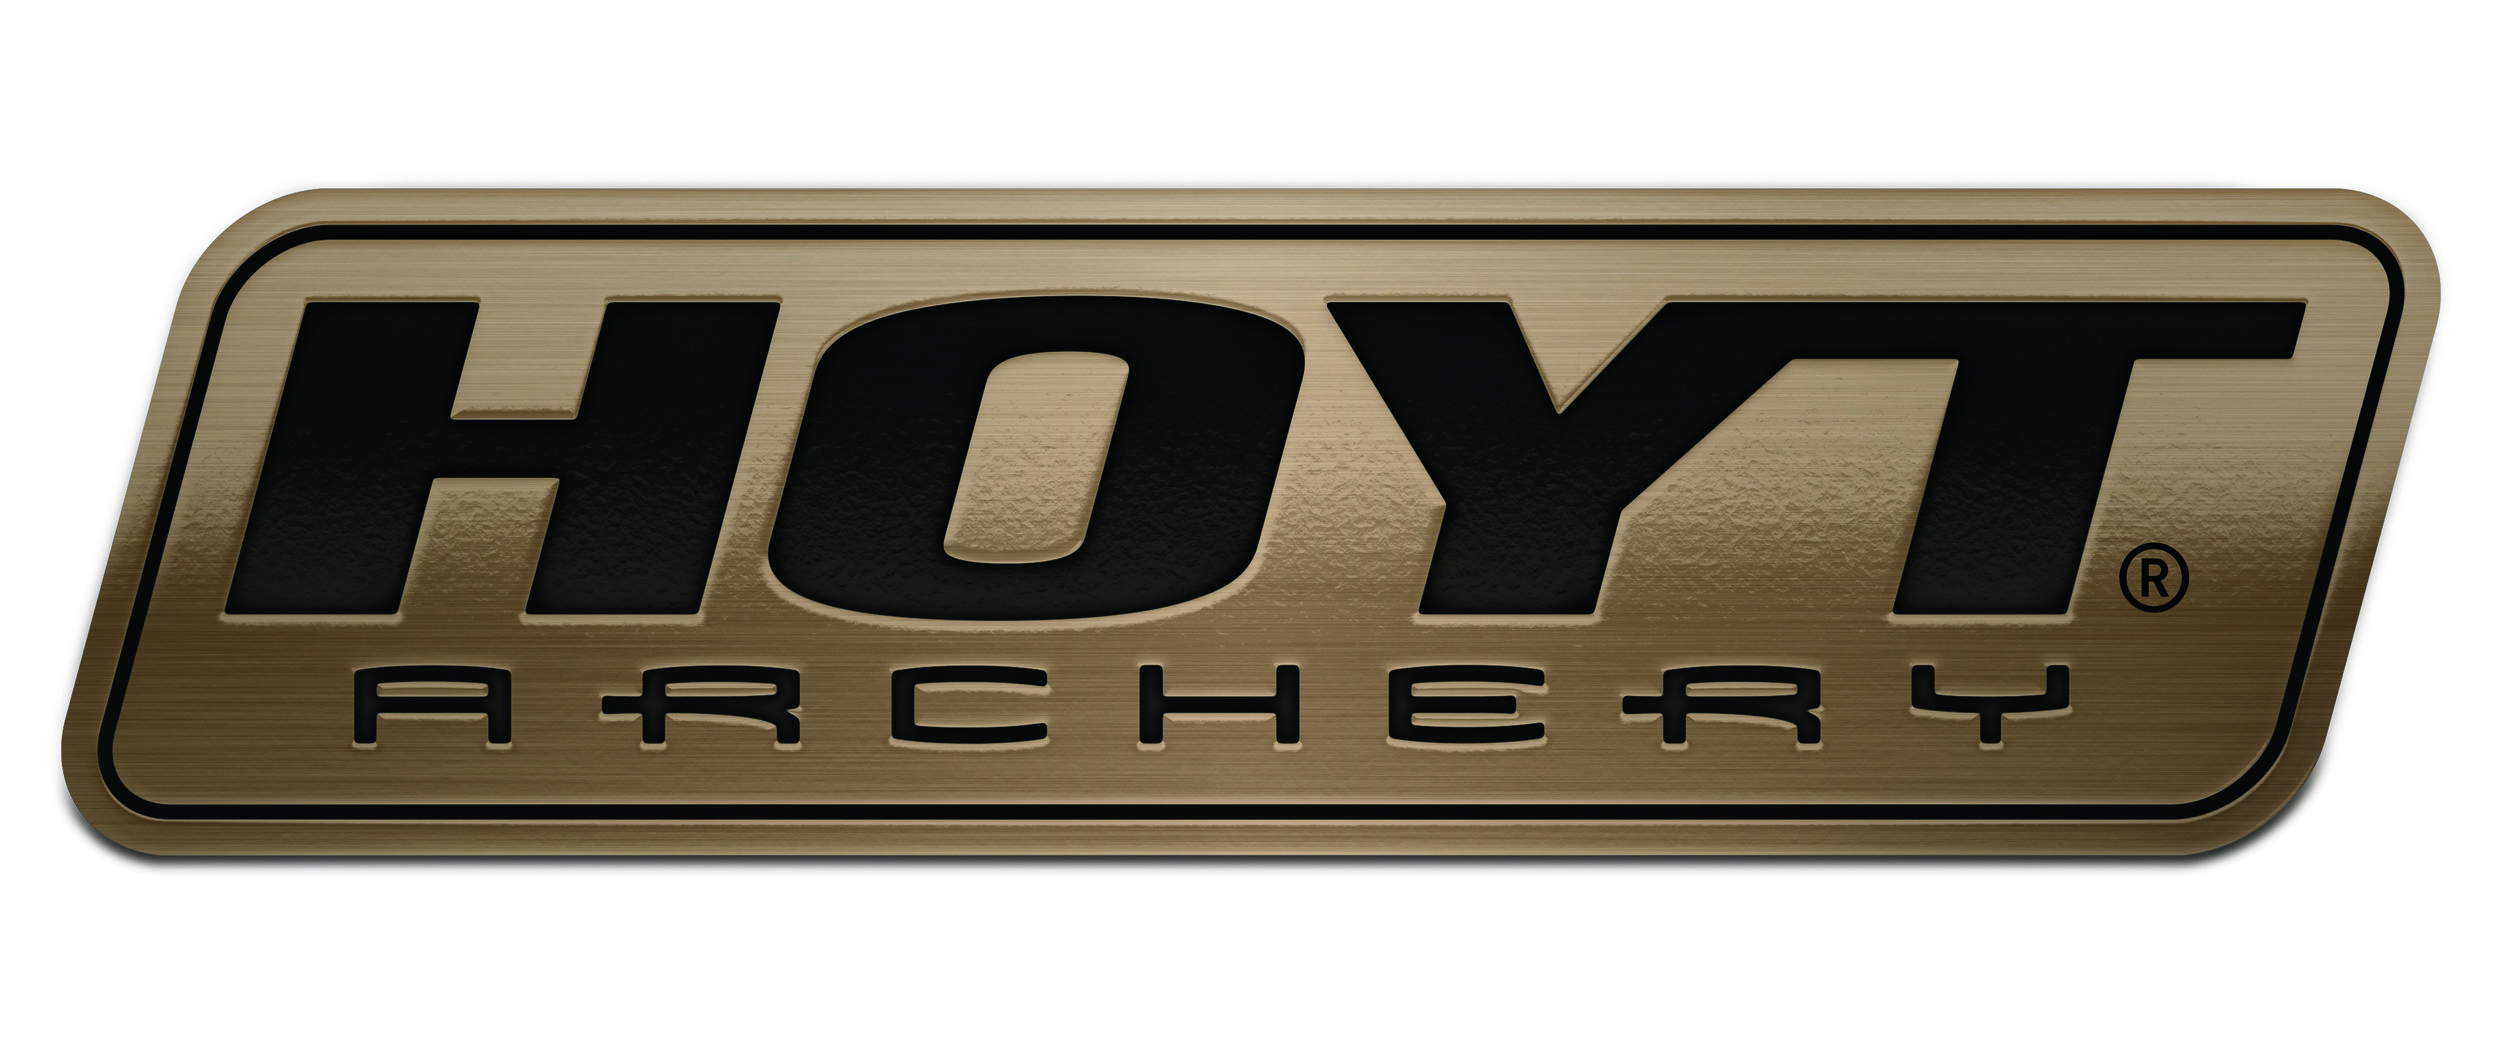 Hoyt Archery bronze logo.jpg